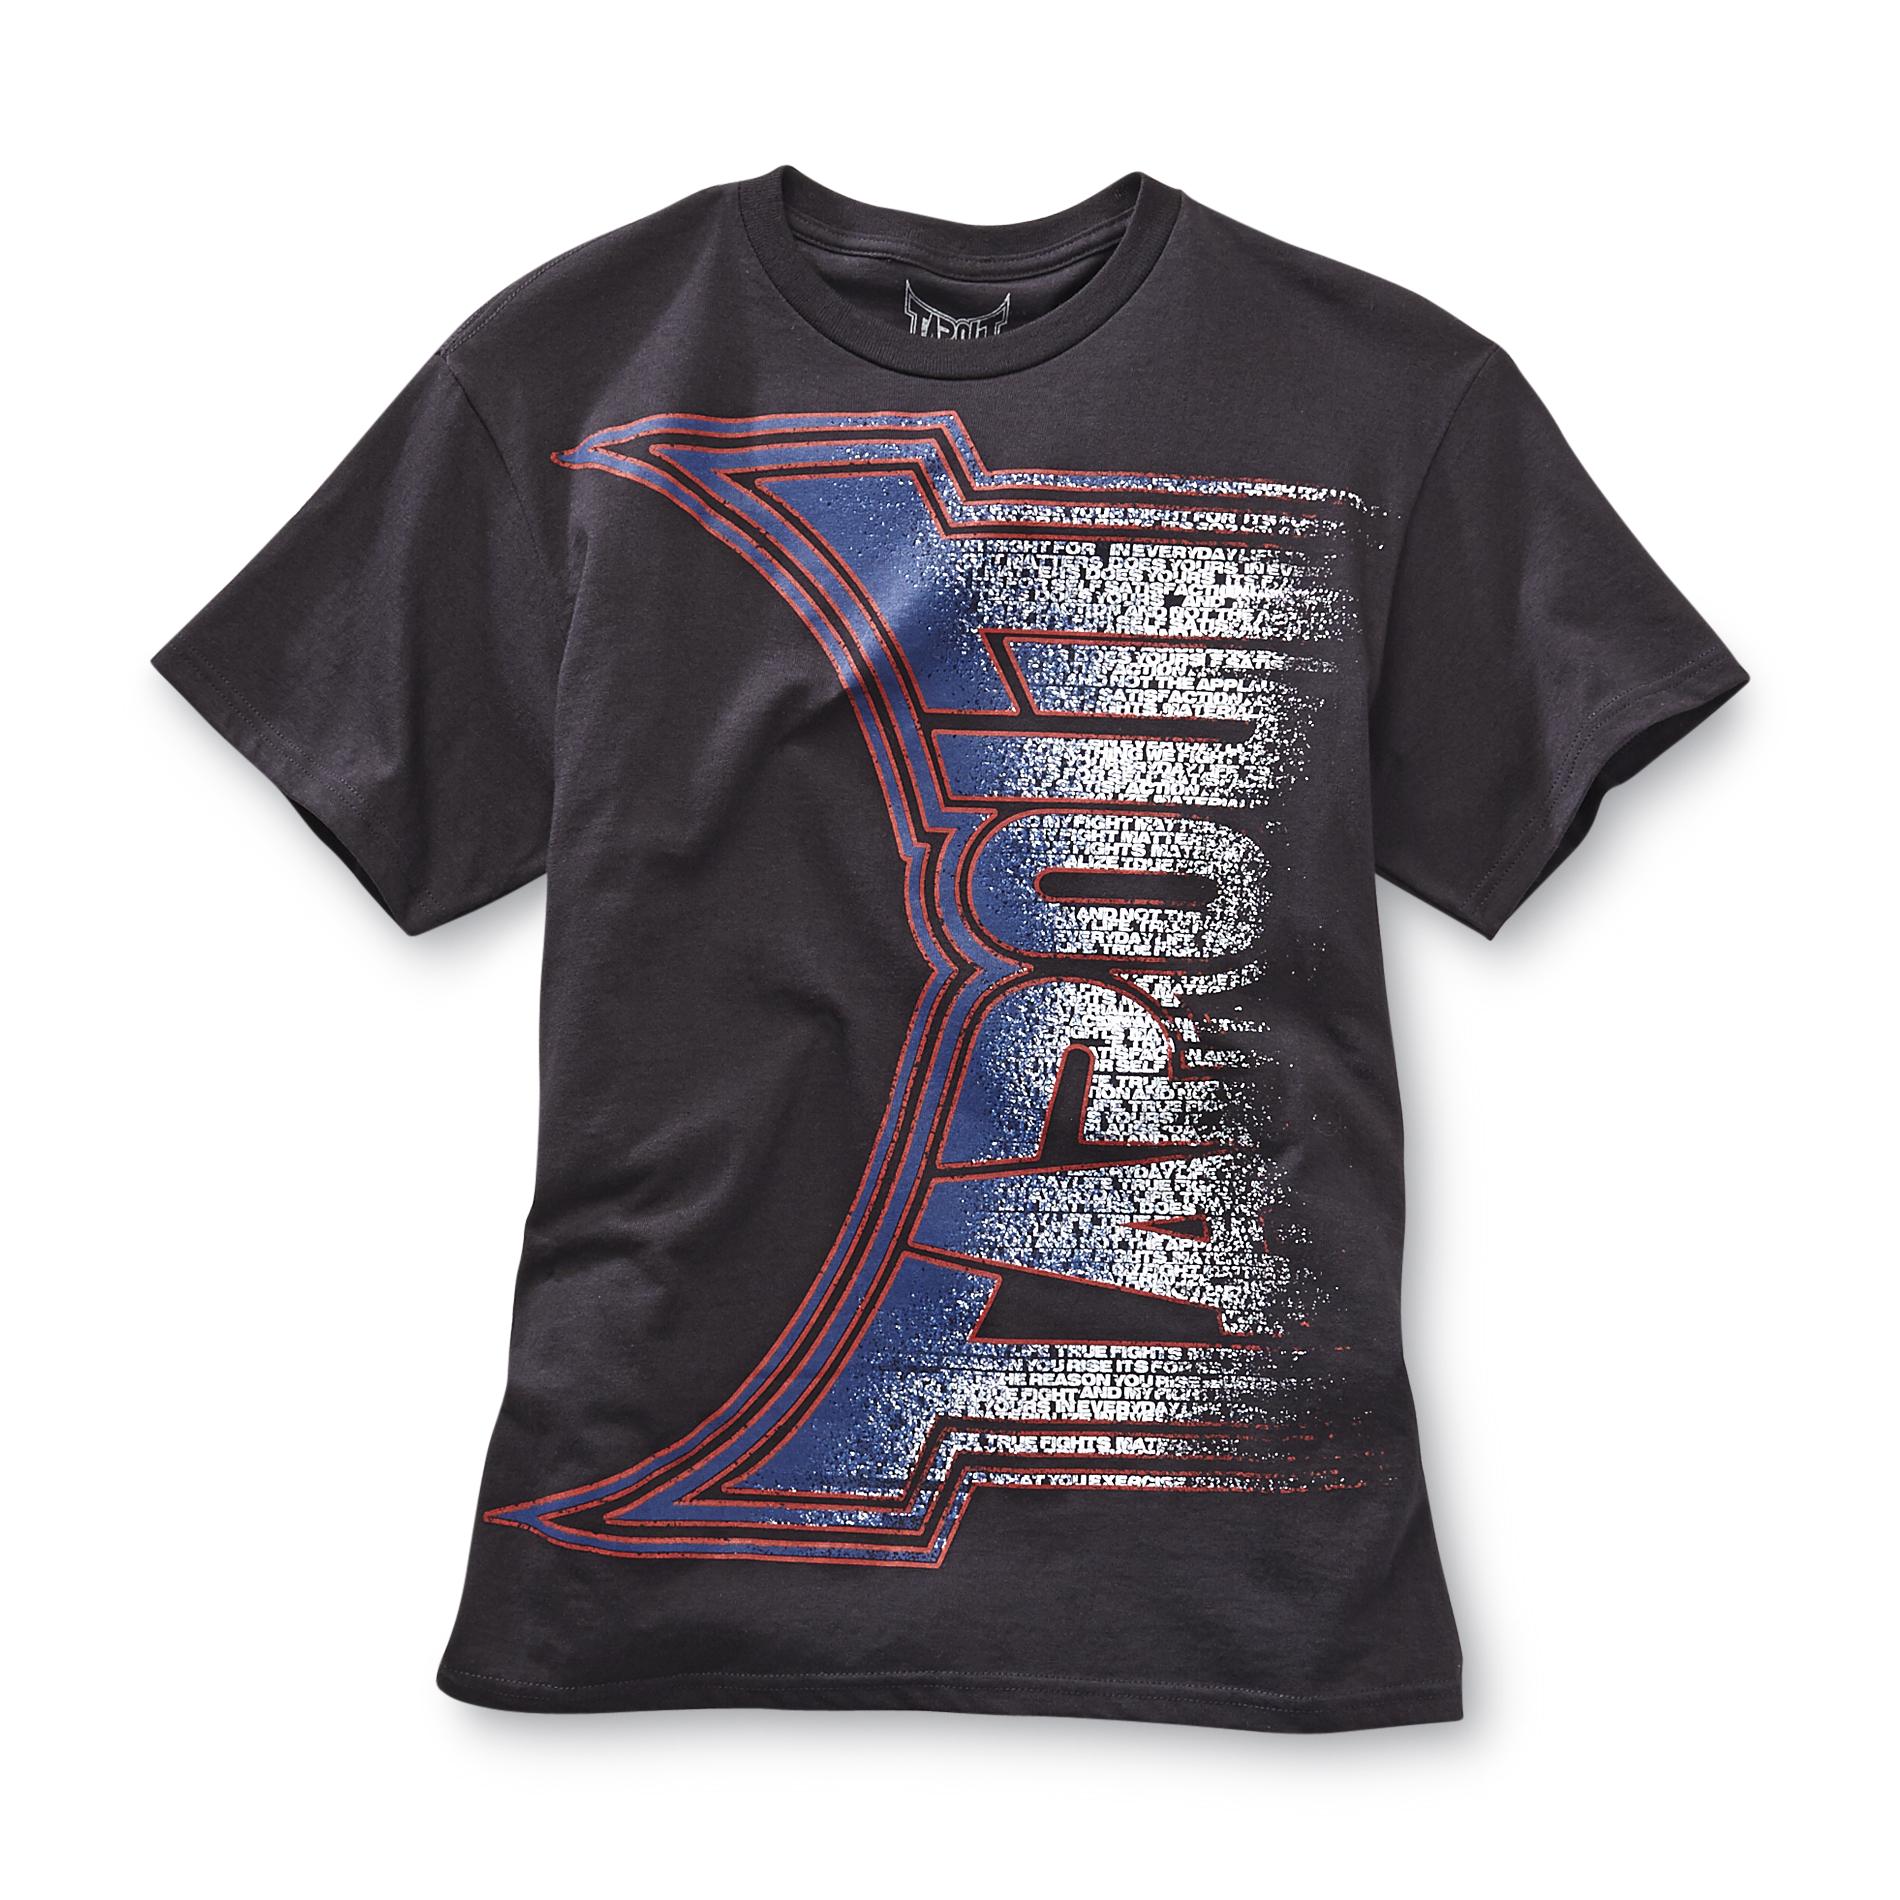 TapouT Men's Graphic T-Shirt